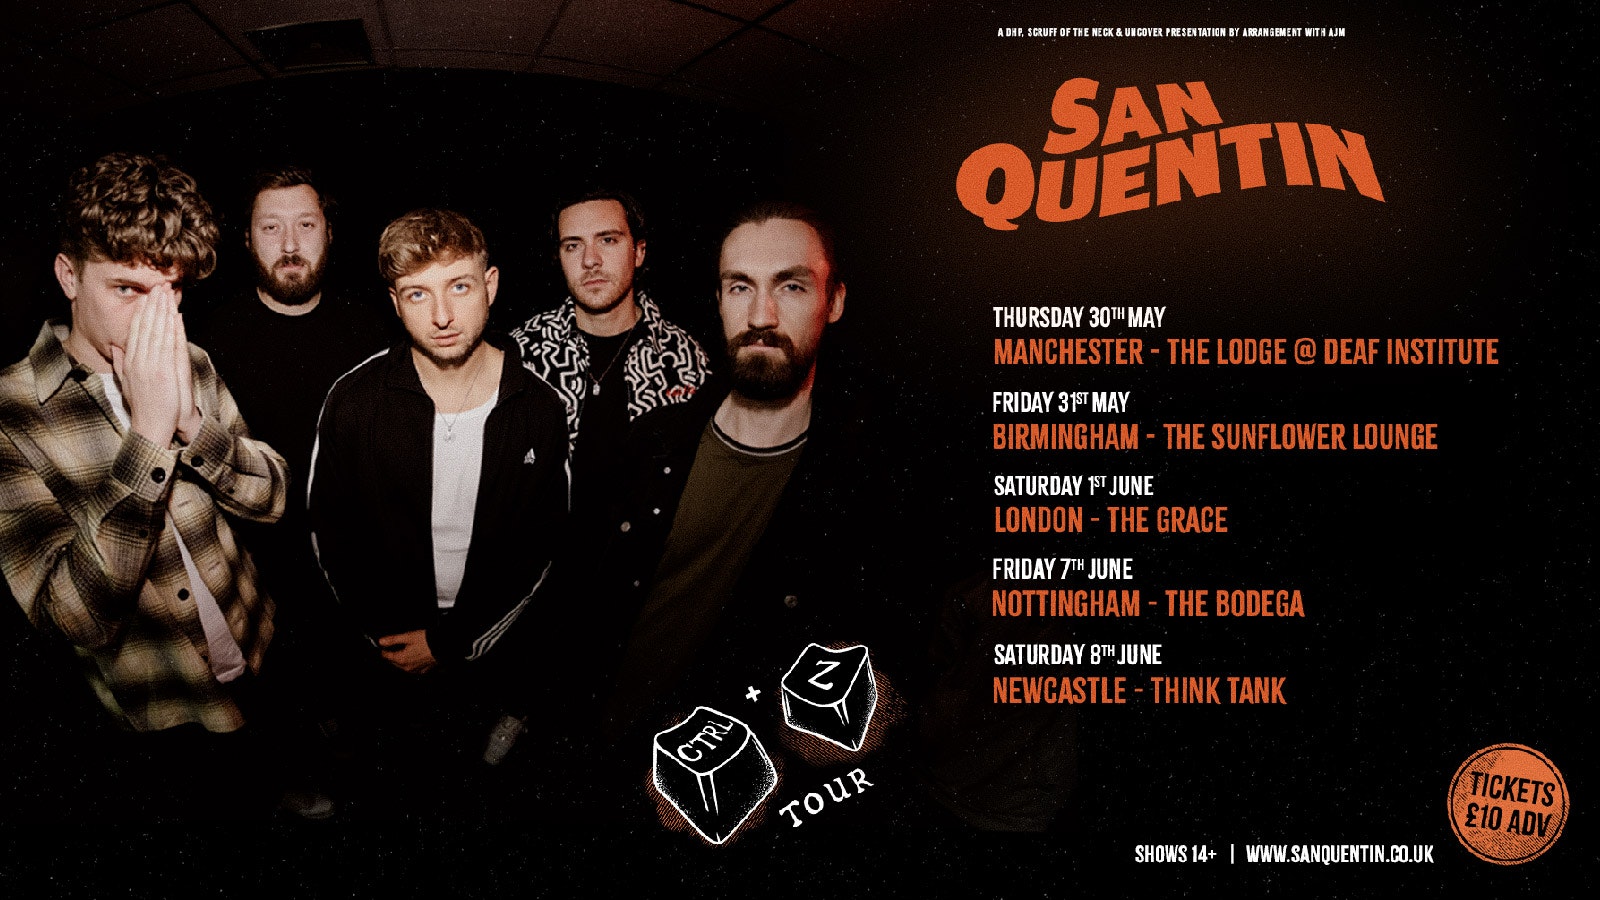 San Quentin | Newcastle, Think Tank?